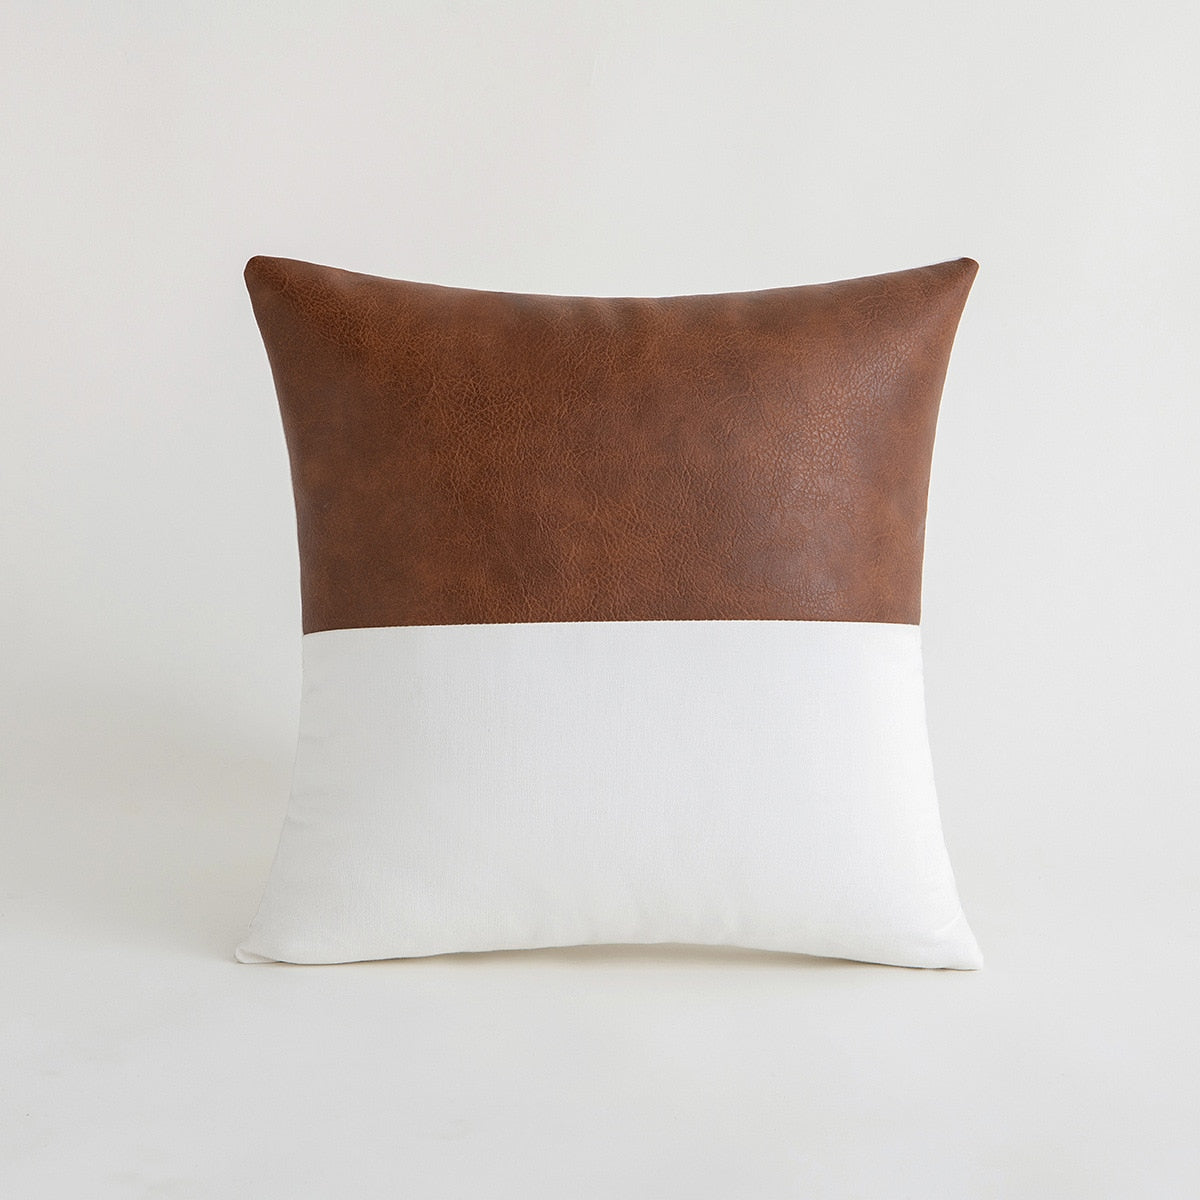 Leather Stripe Pillow